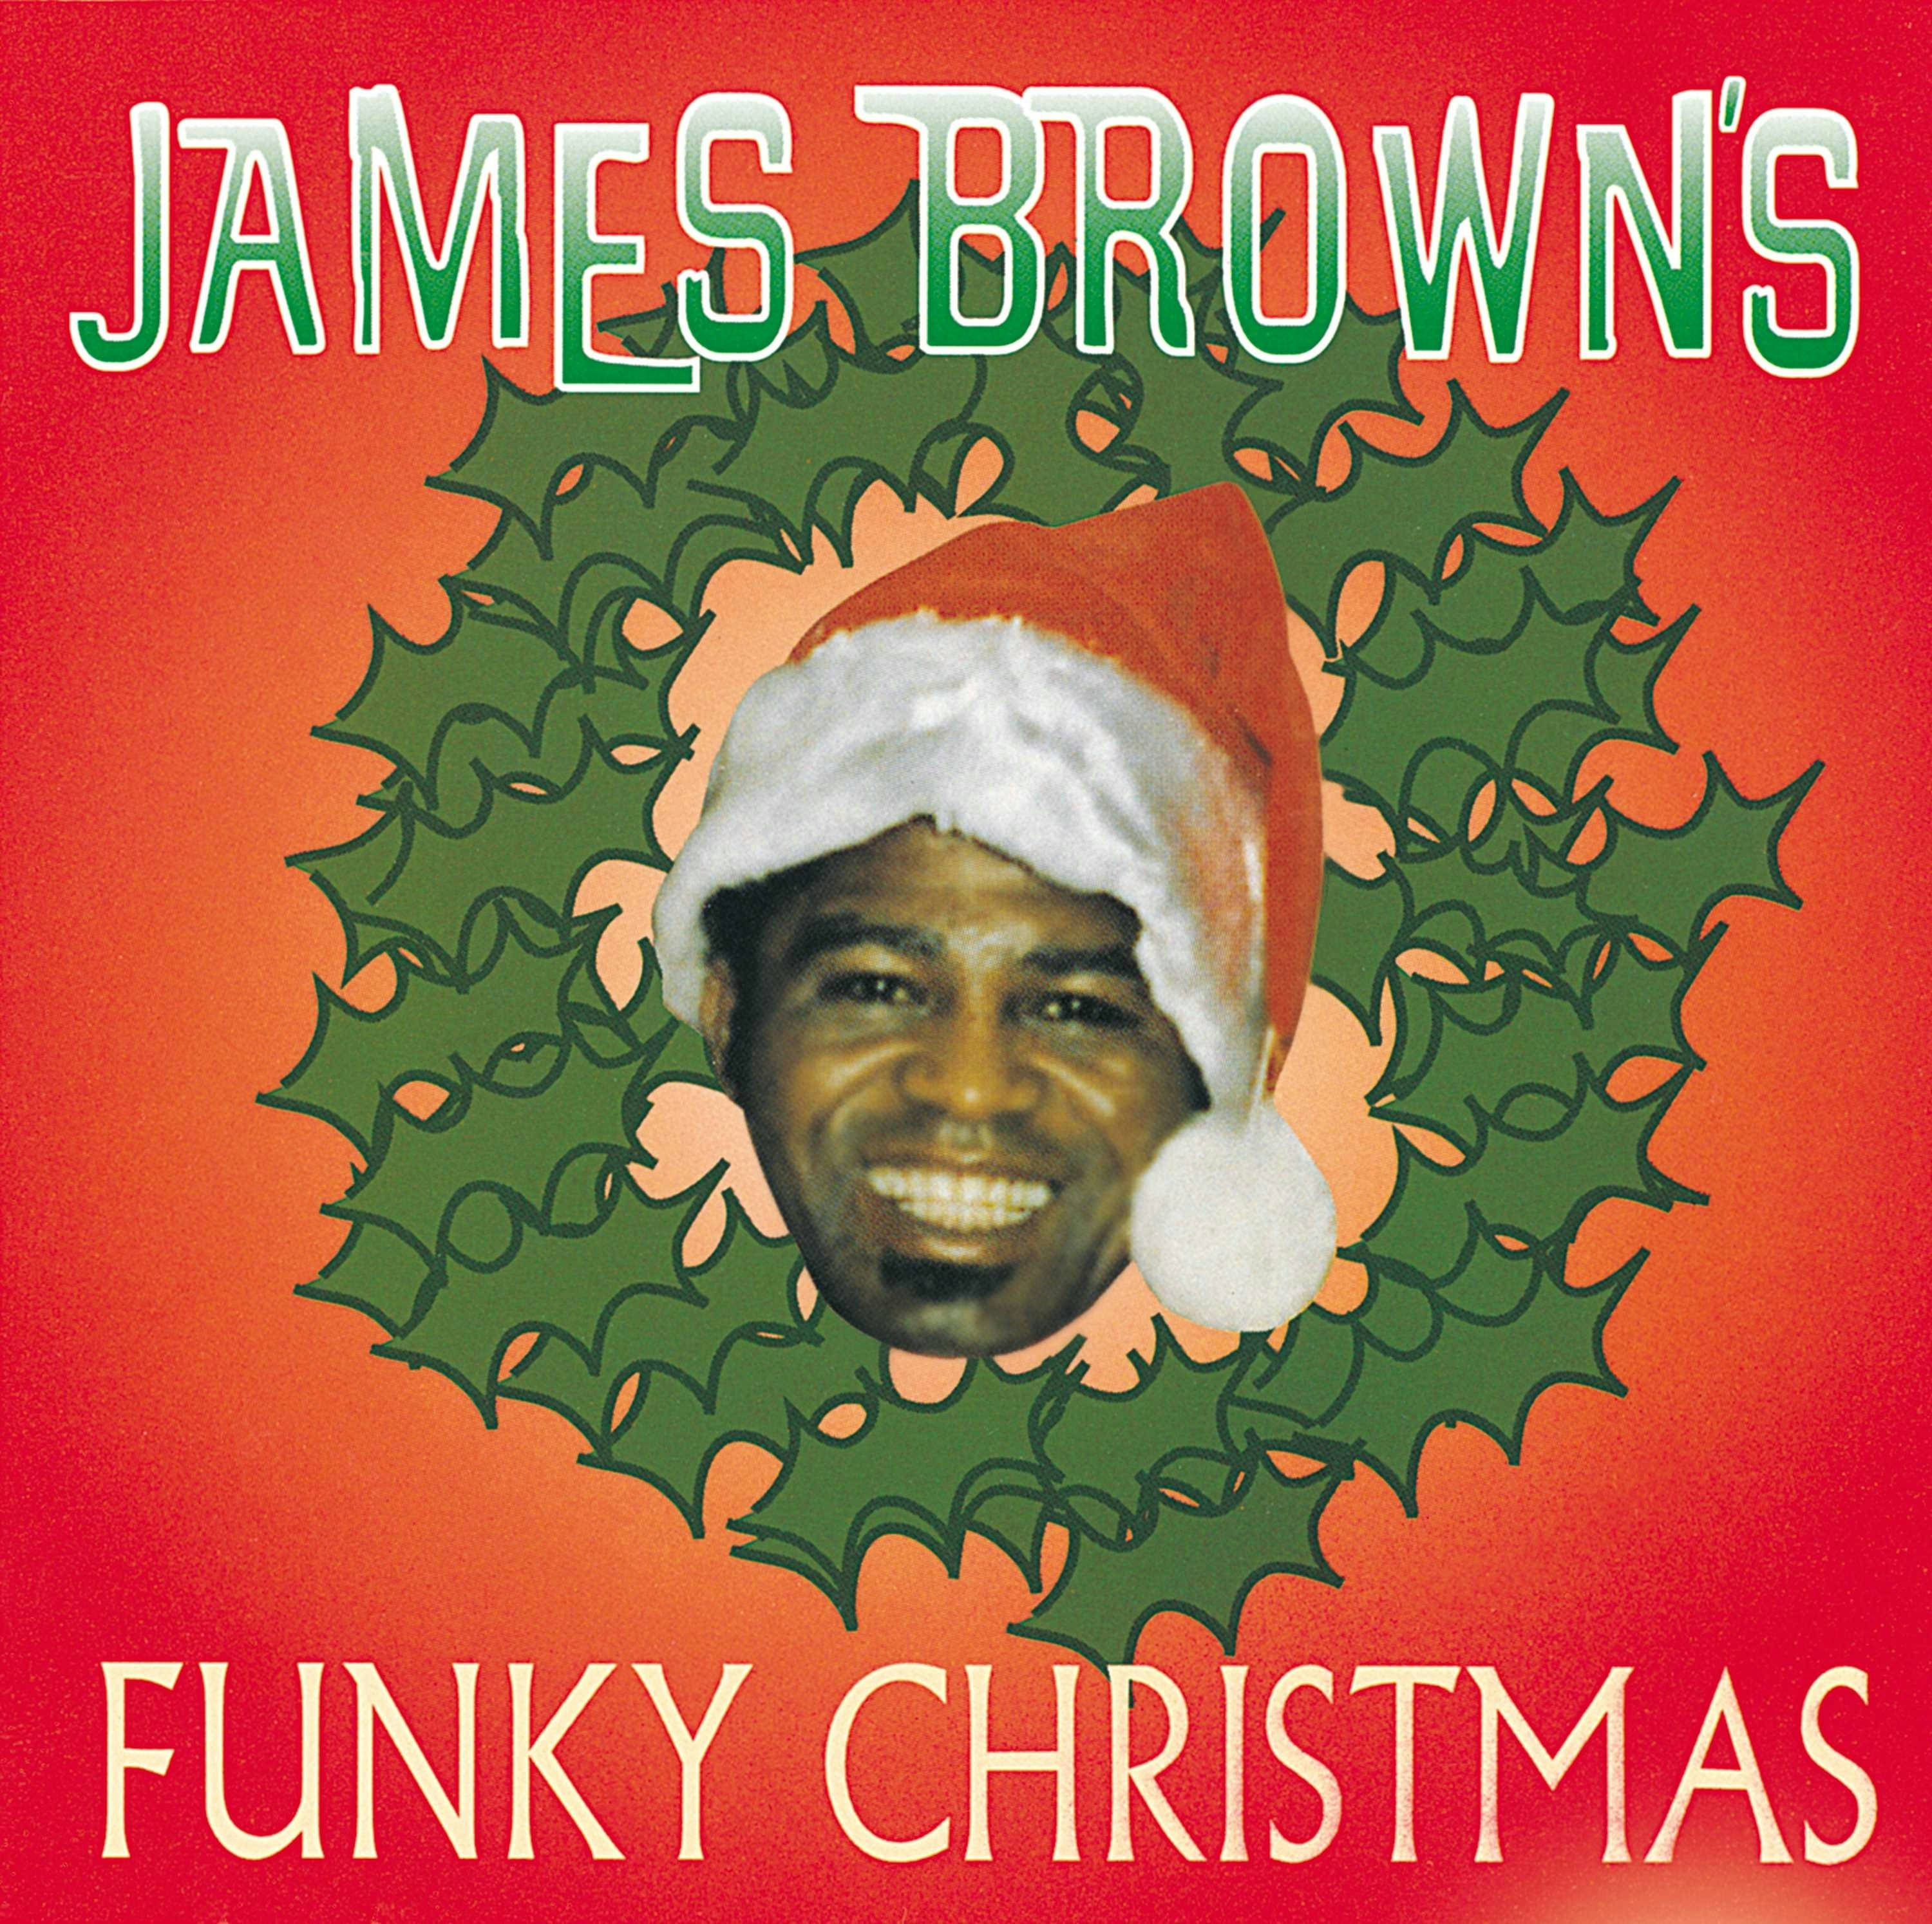 Album artwork for Album artwork for Funky Christmas by James Brown by Funky Christmas - James Brown